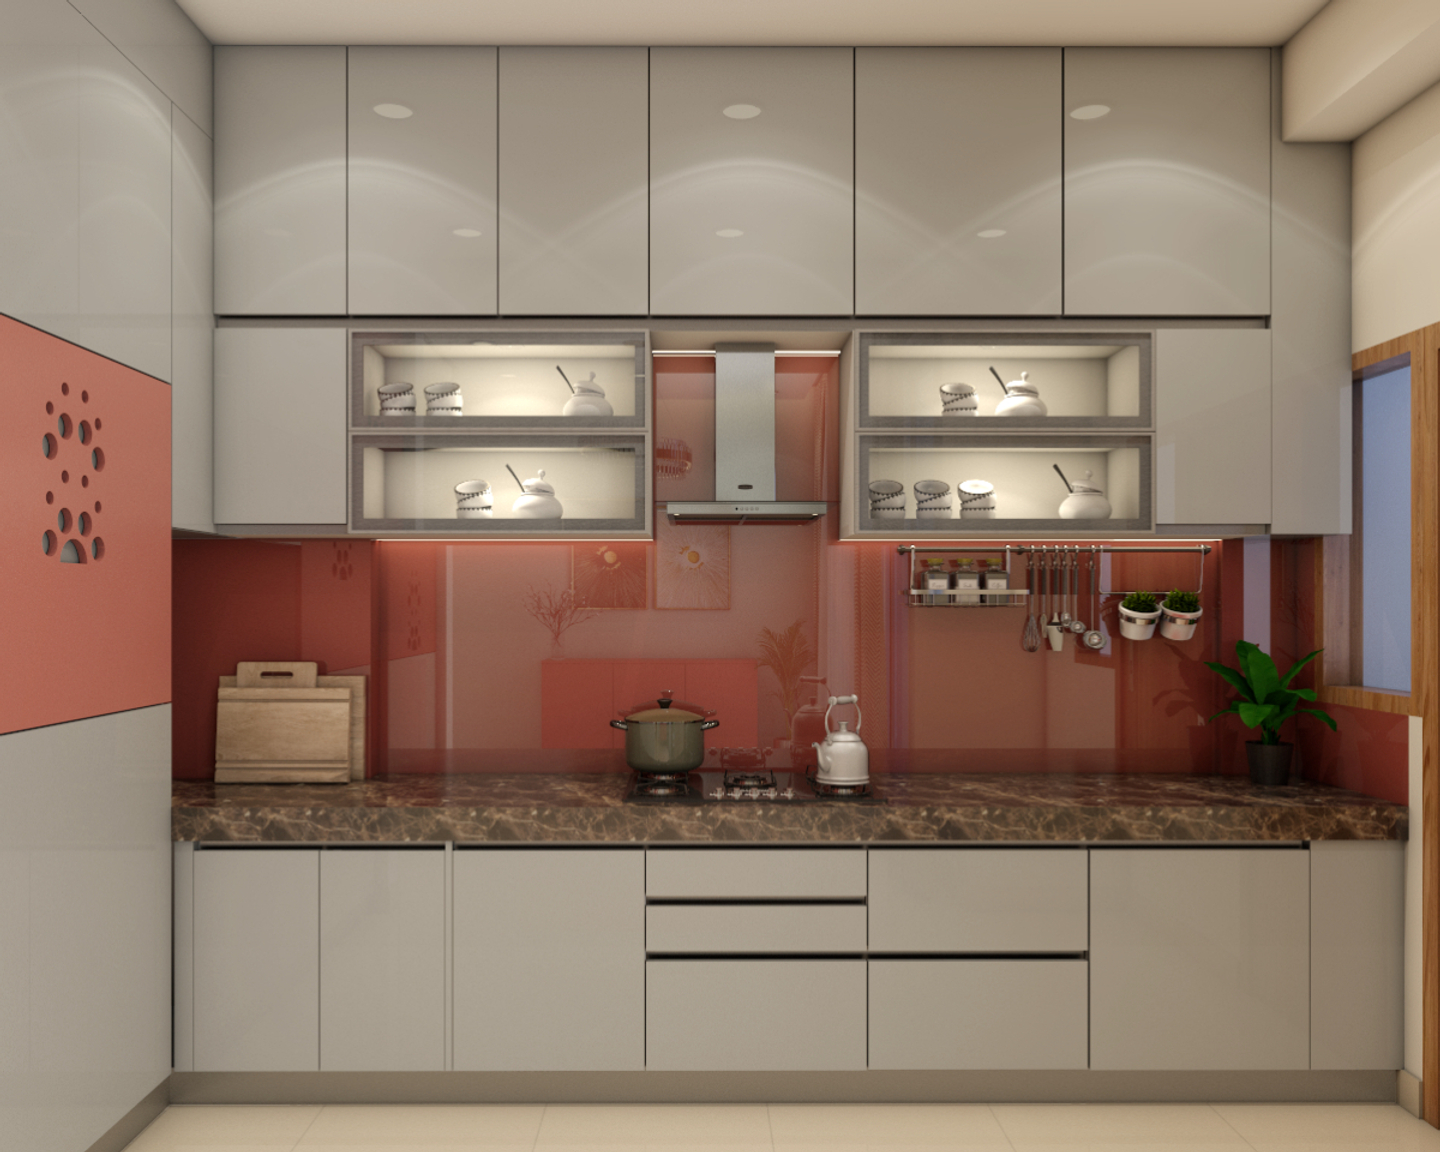 Modern Kitchen Design For Rental Spaces - Livspace